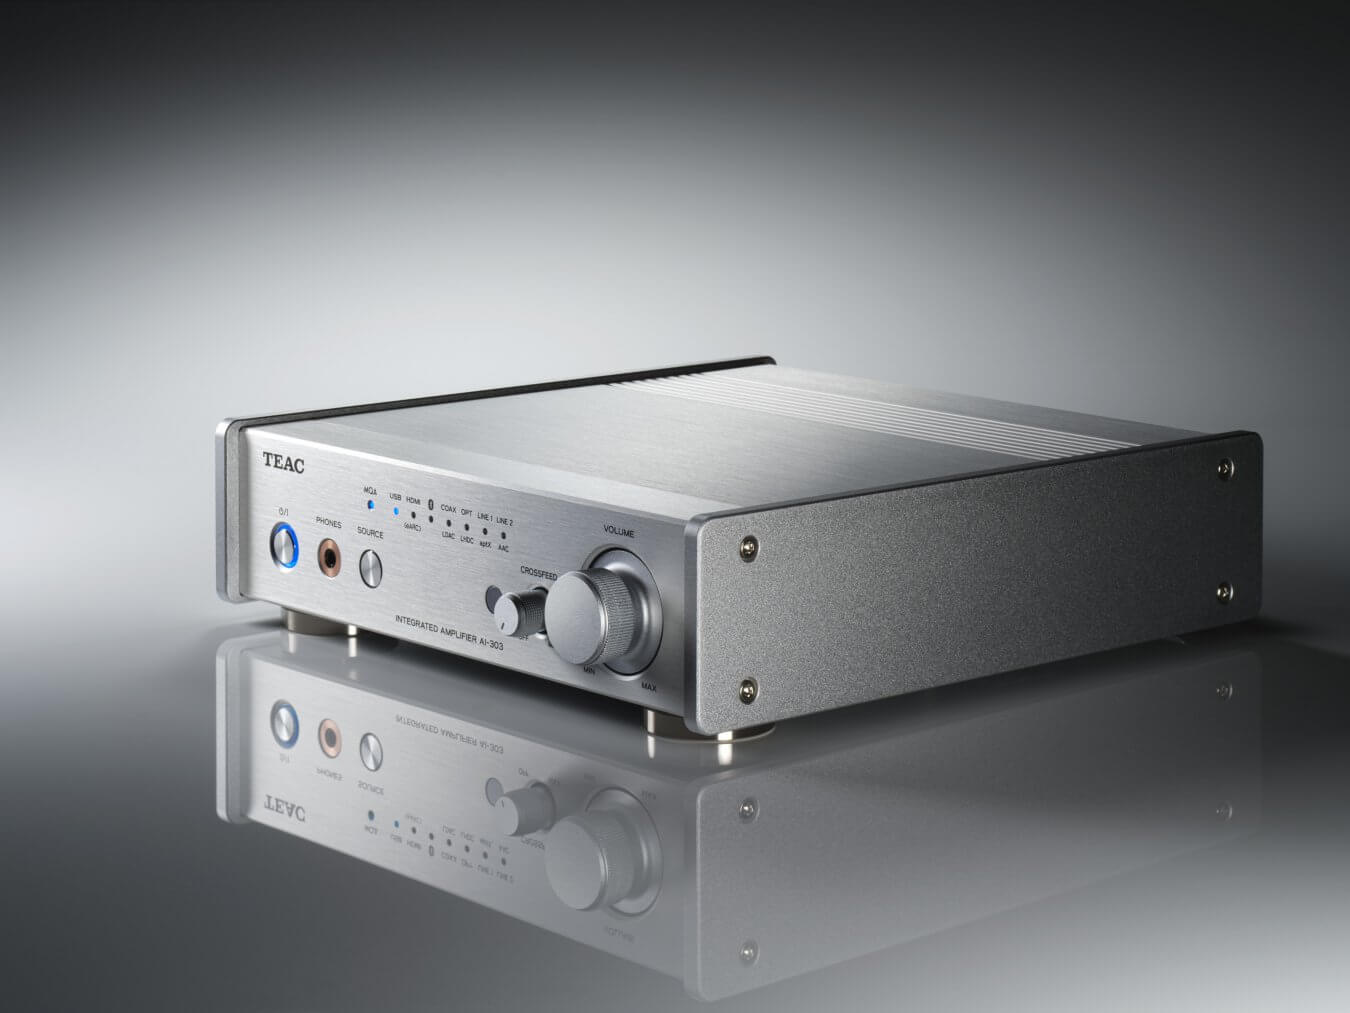 TEAC presents the new AI-303 Stereo Amplifier - The Gear Guide | Aqipa